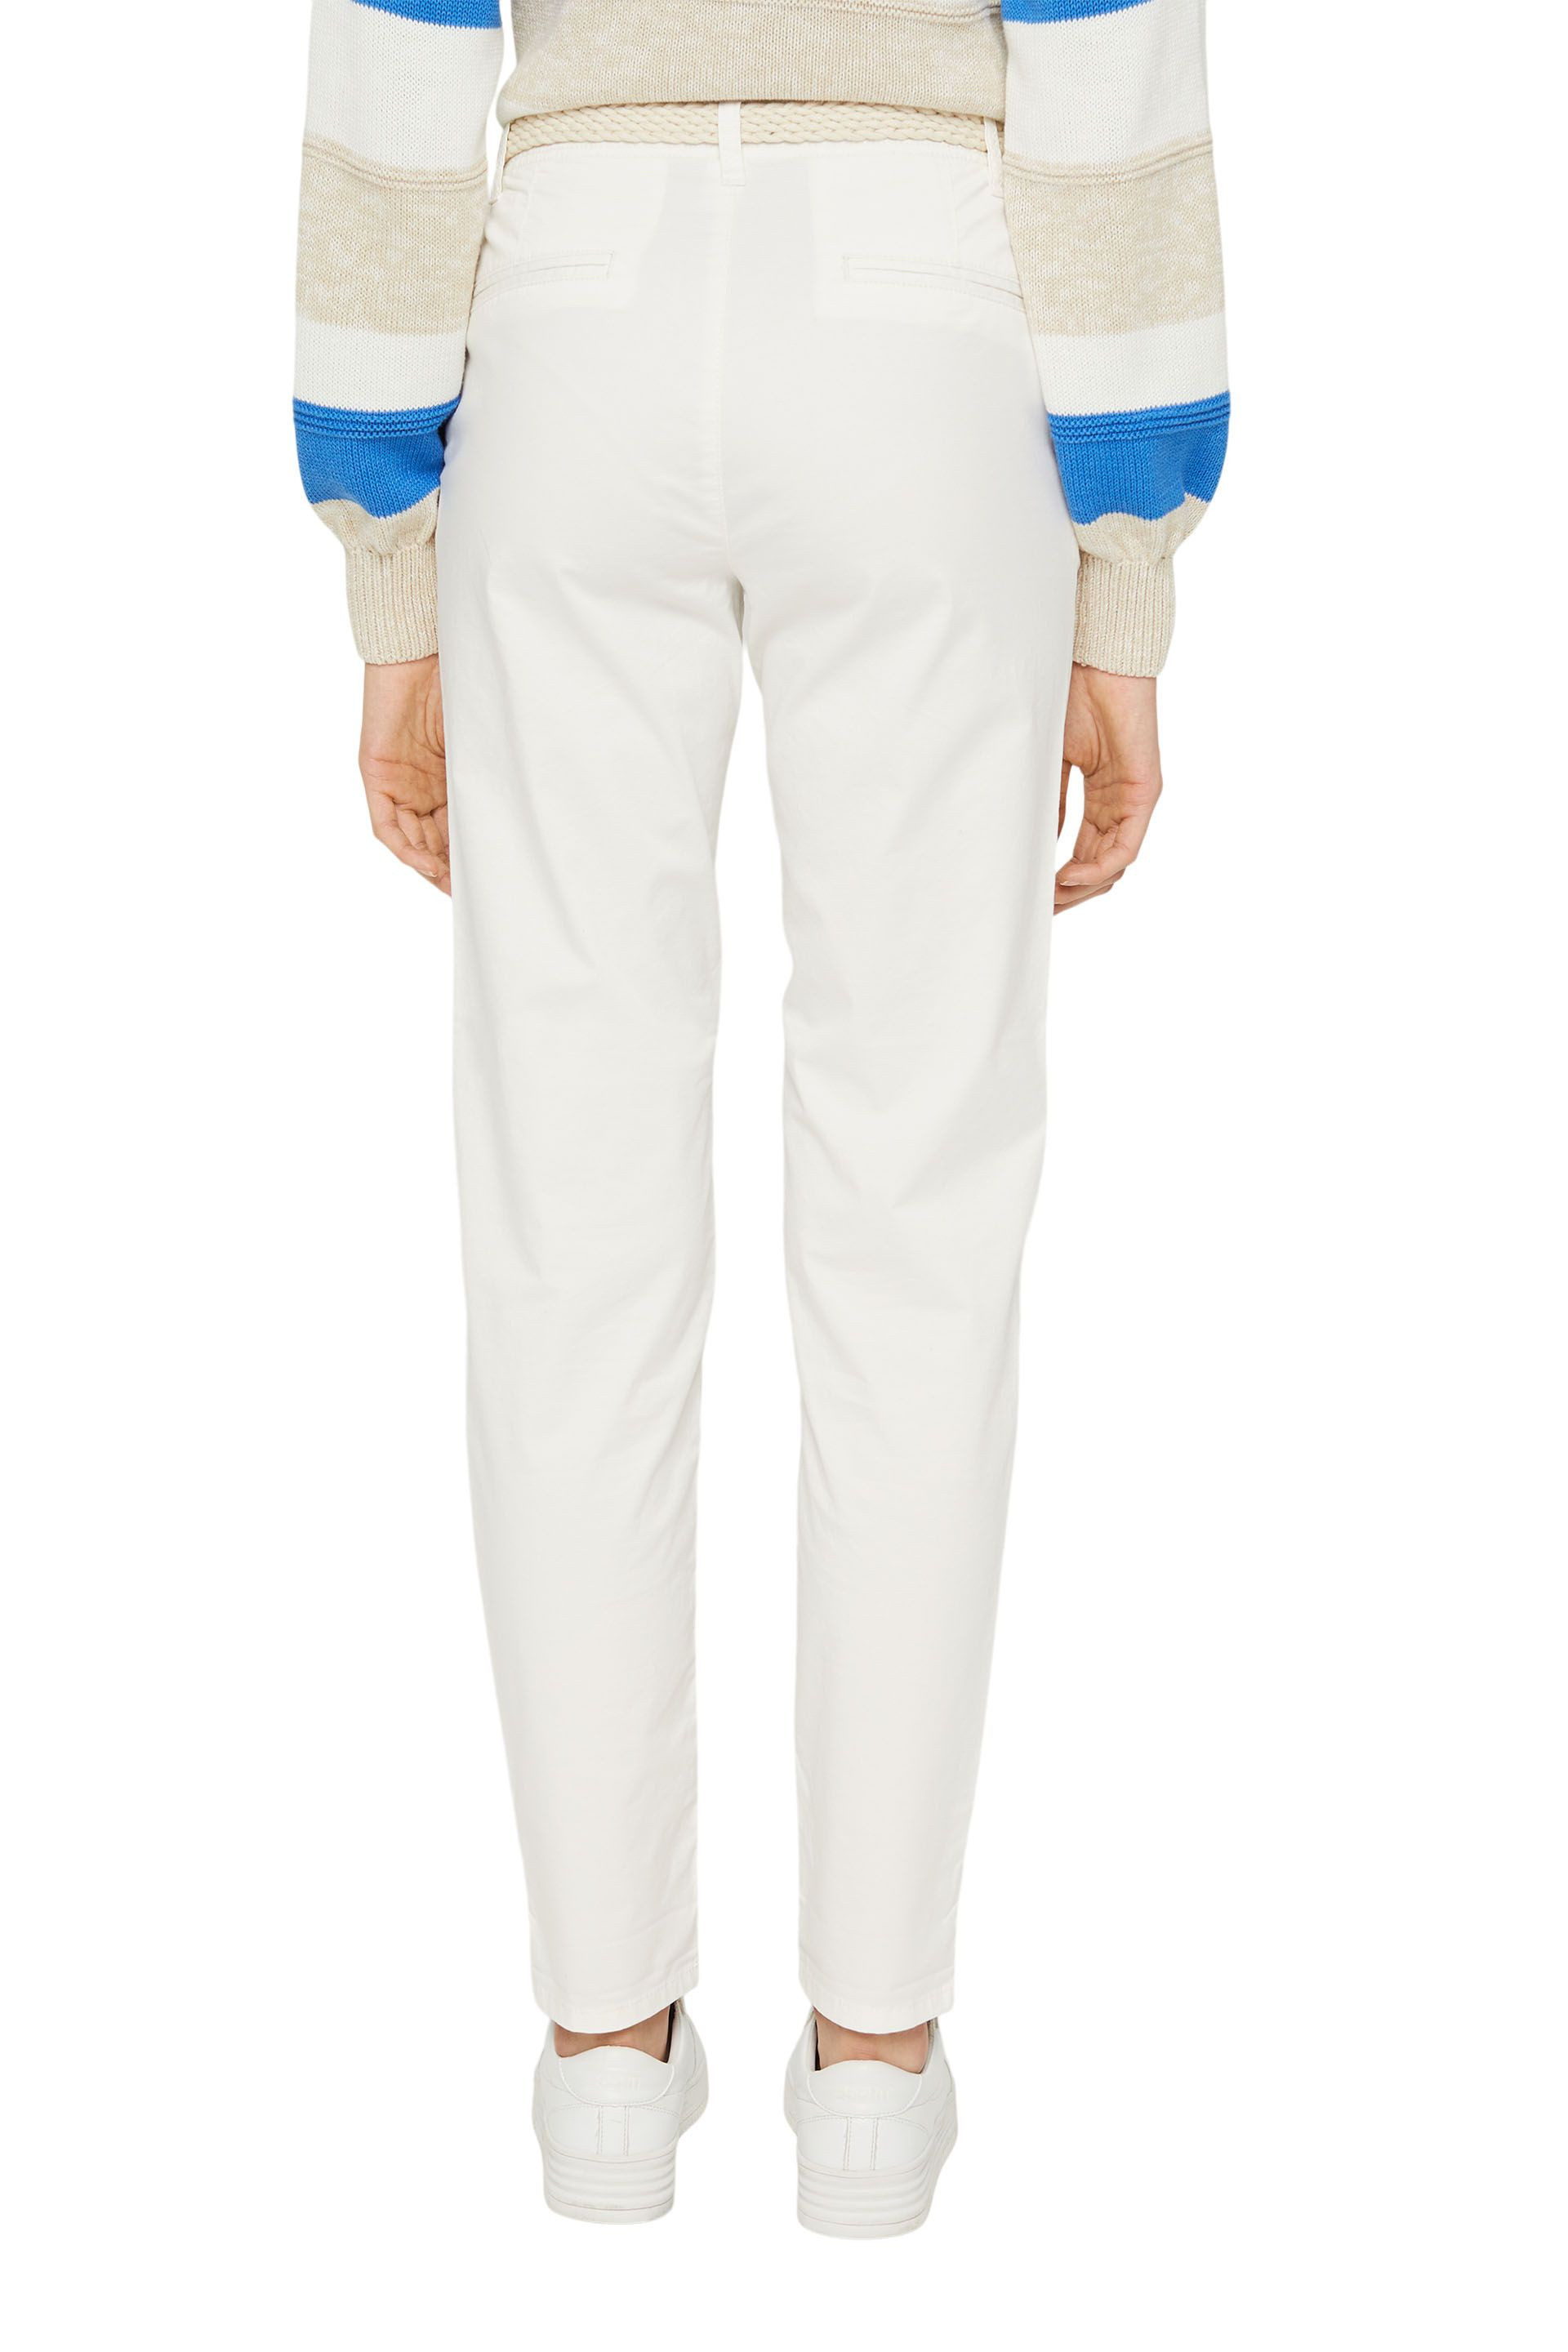 Pantaloni chino con cintura intrecciata, Bianco, large image number 2